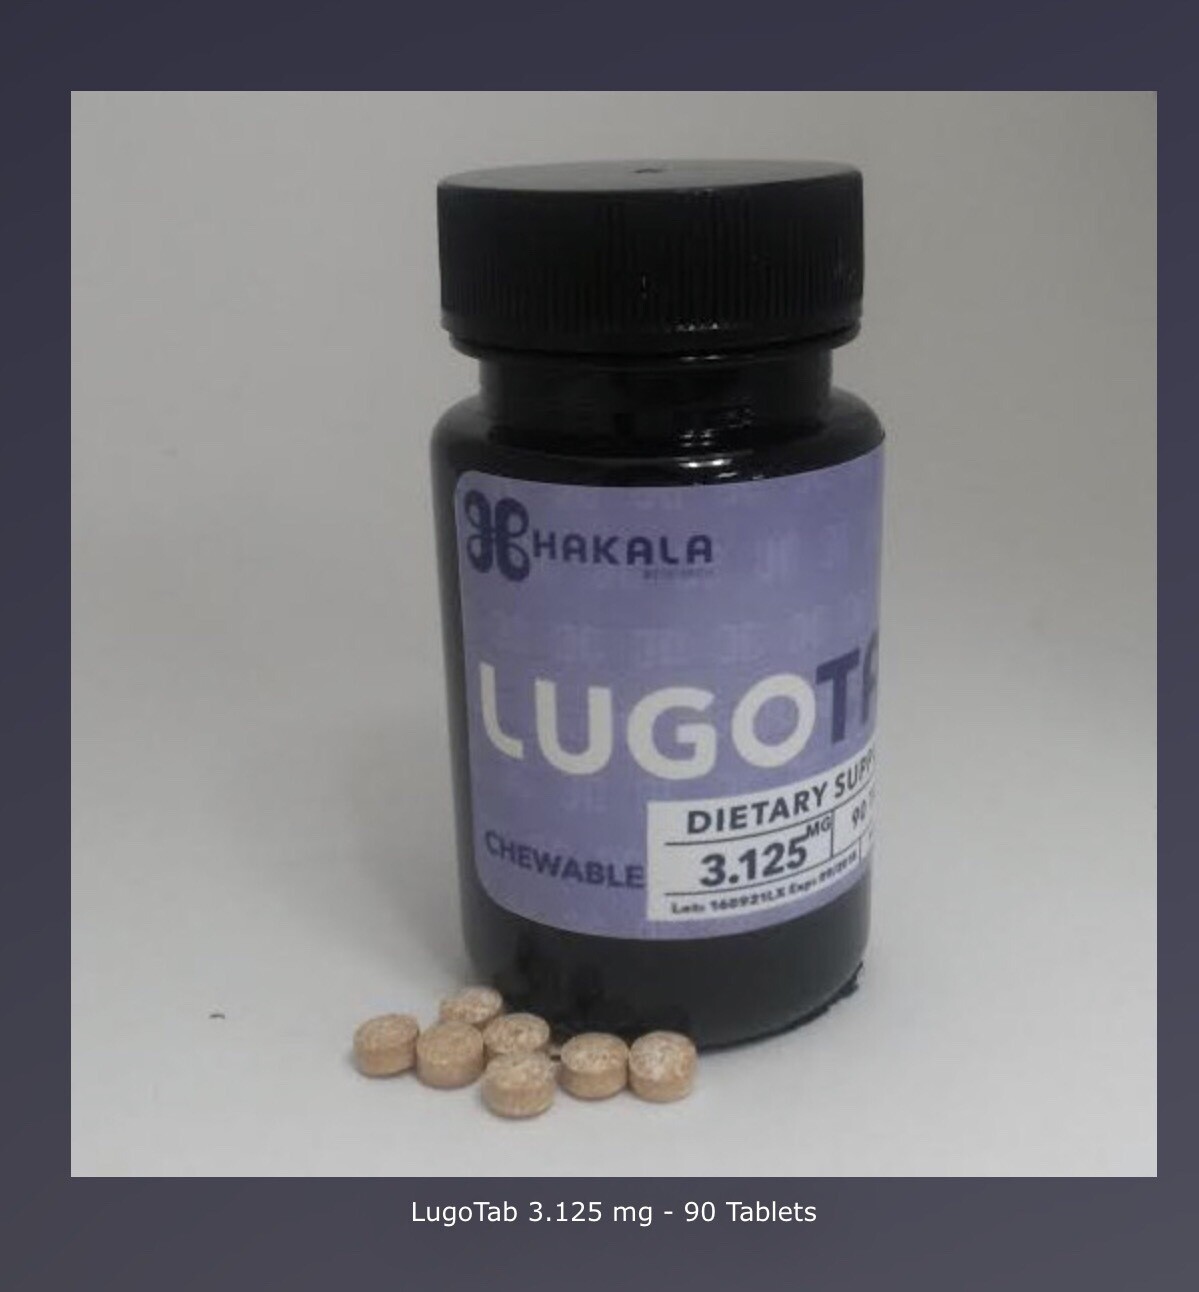 LugoTab 3.125 mg - 90 Tablets